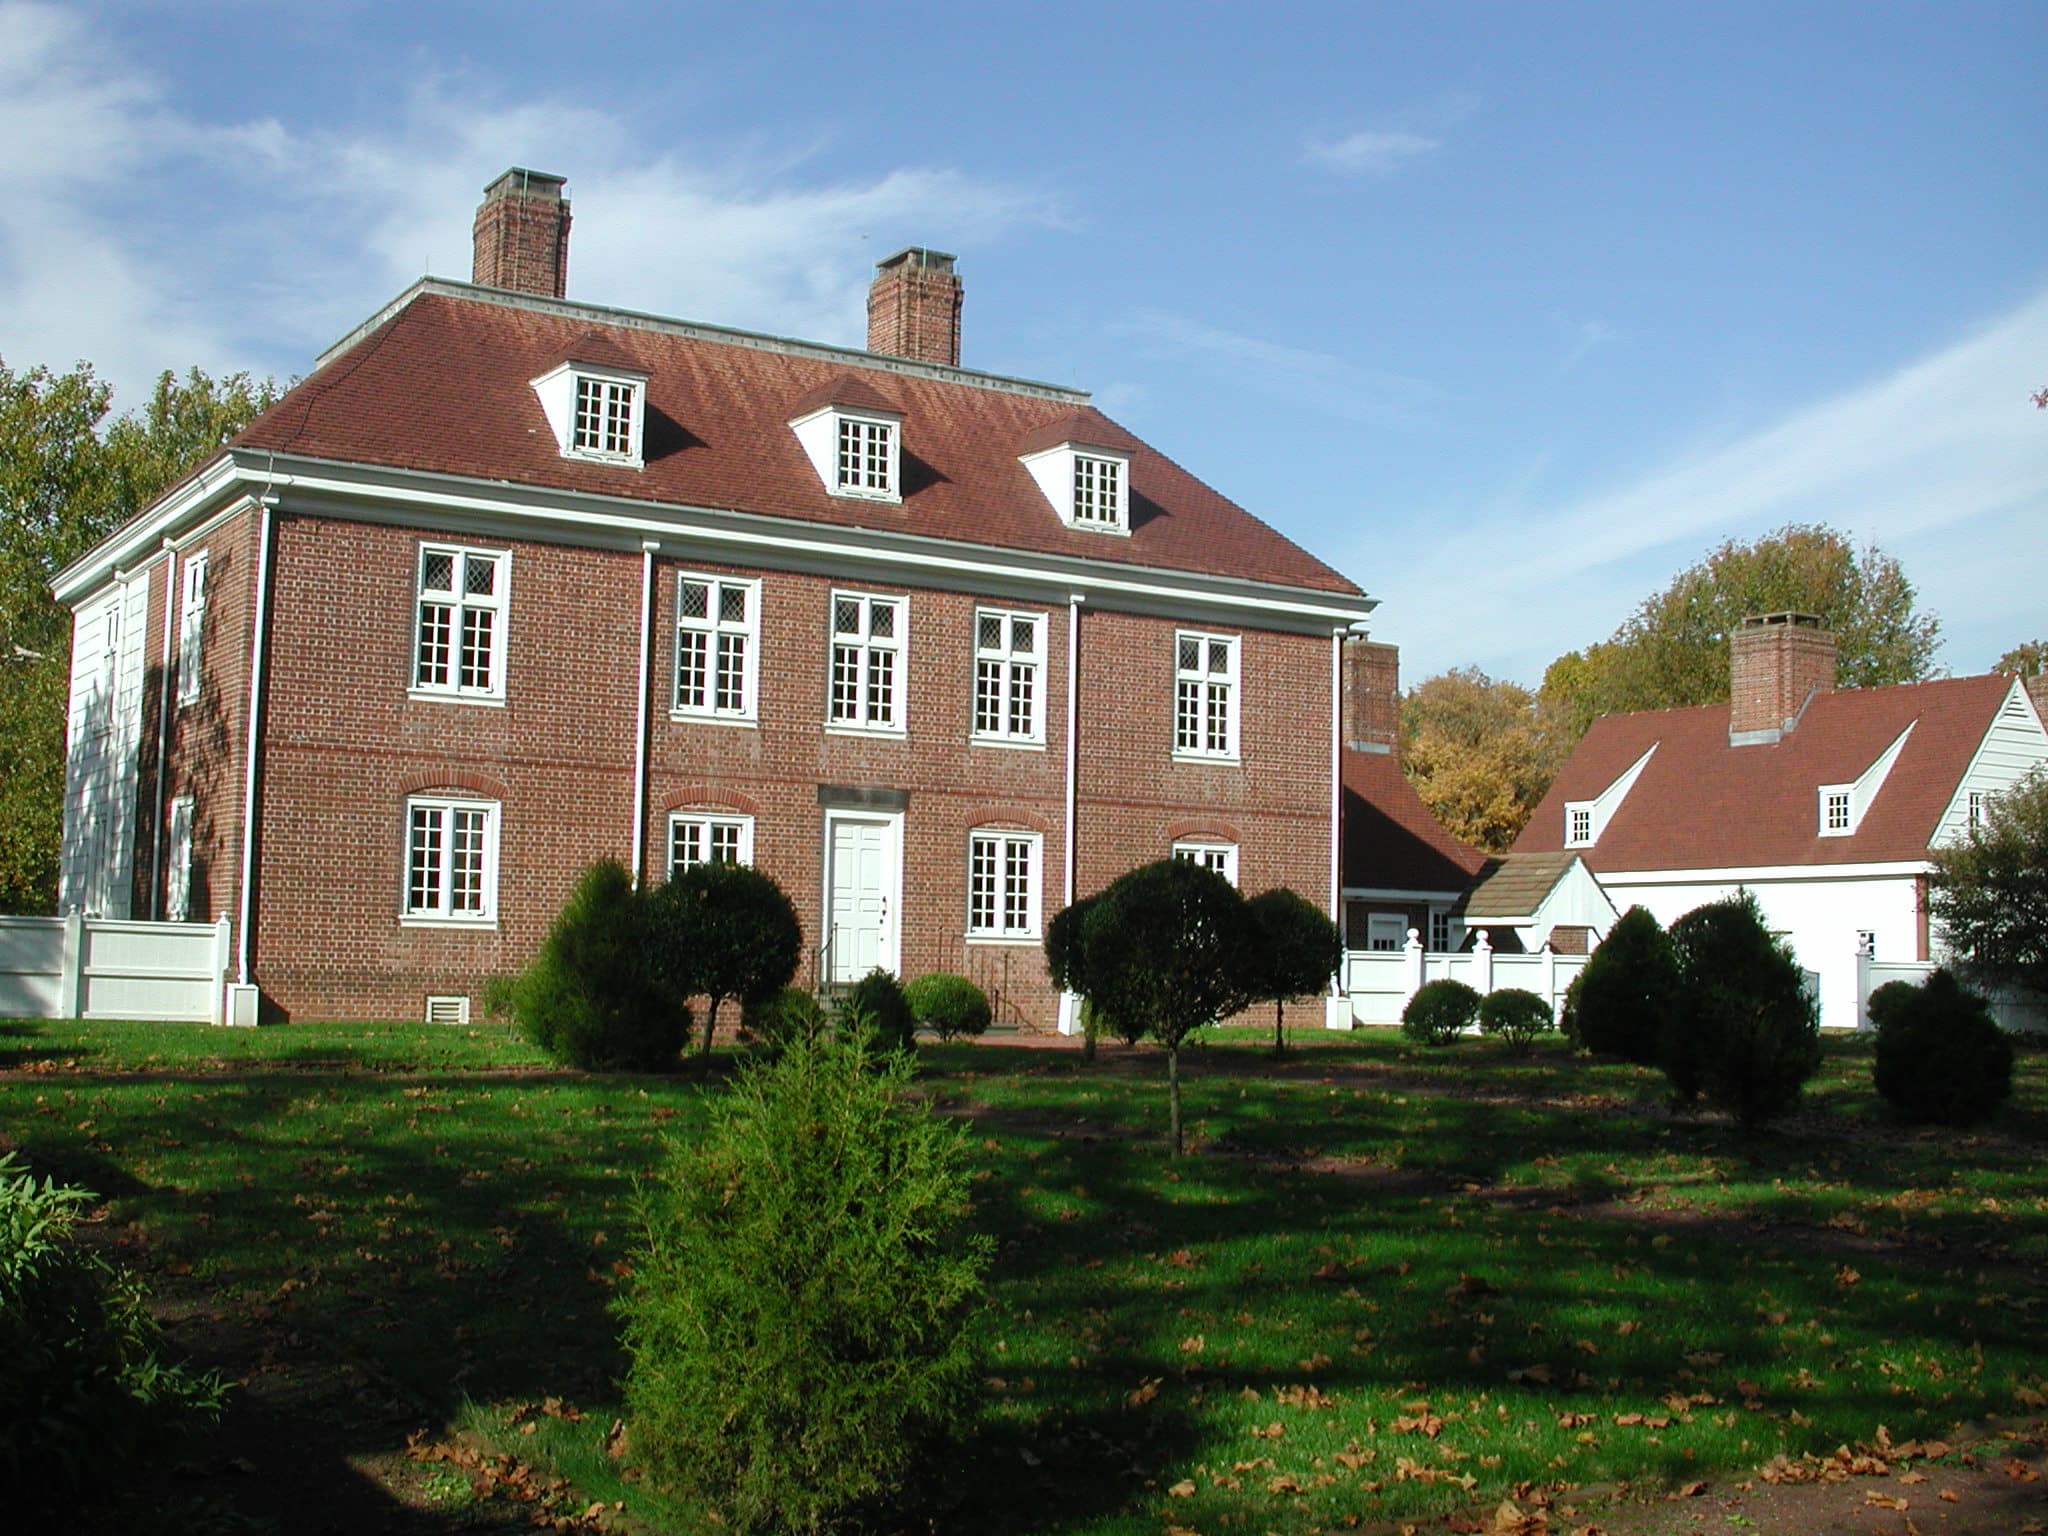 Pennsbury Manor's Manor House